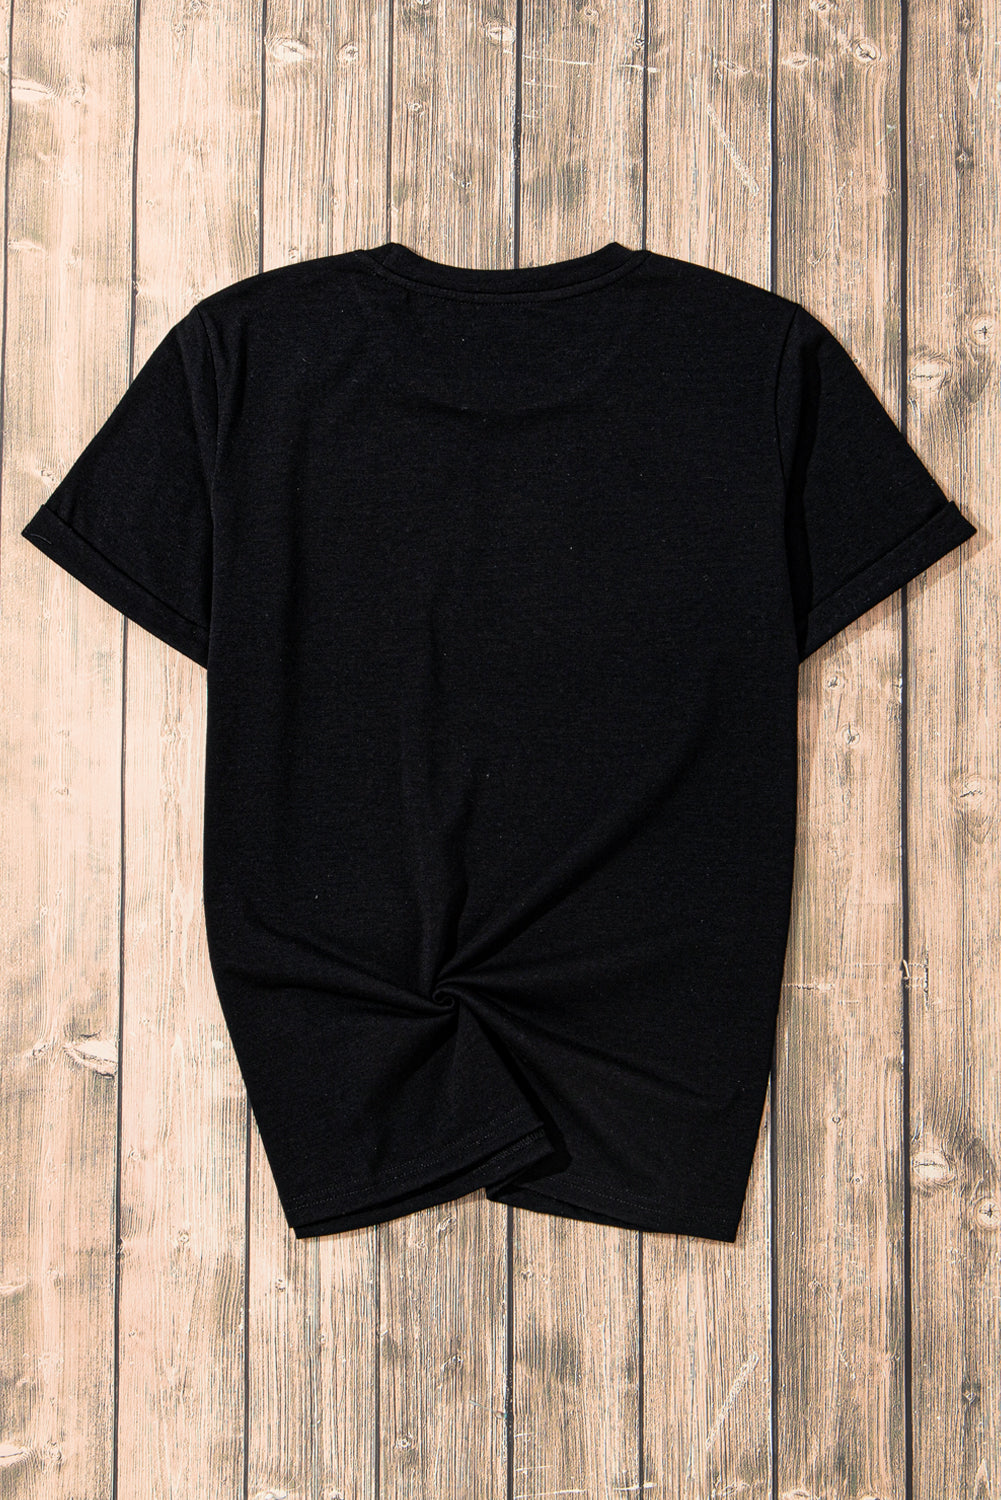 Black Sequin Bow Ribbon Graphic T Shirt Graphic Tees JT's Designer Fashion